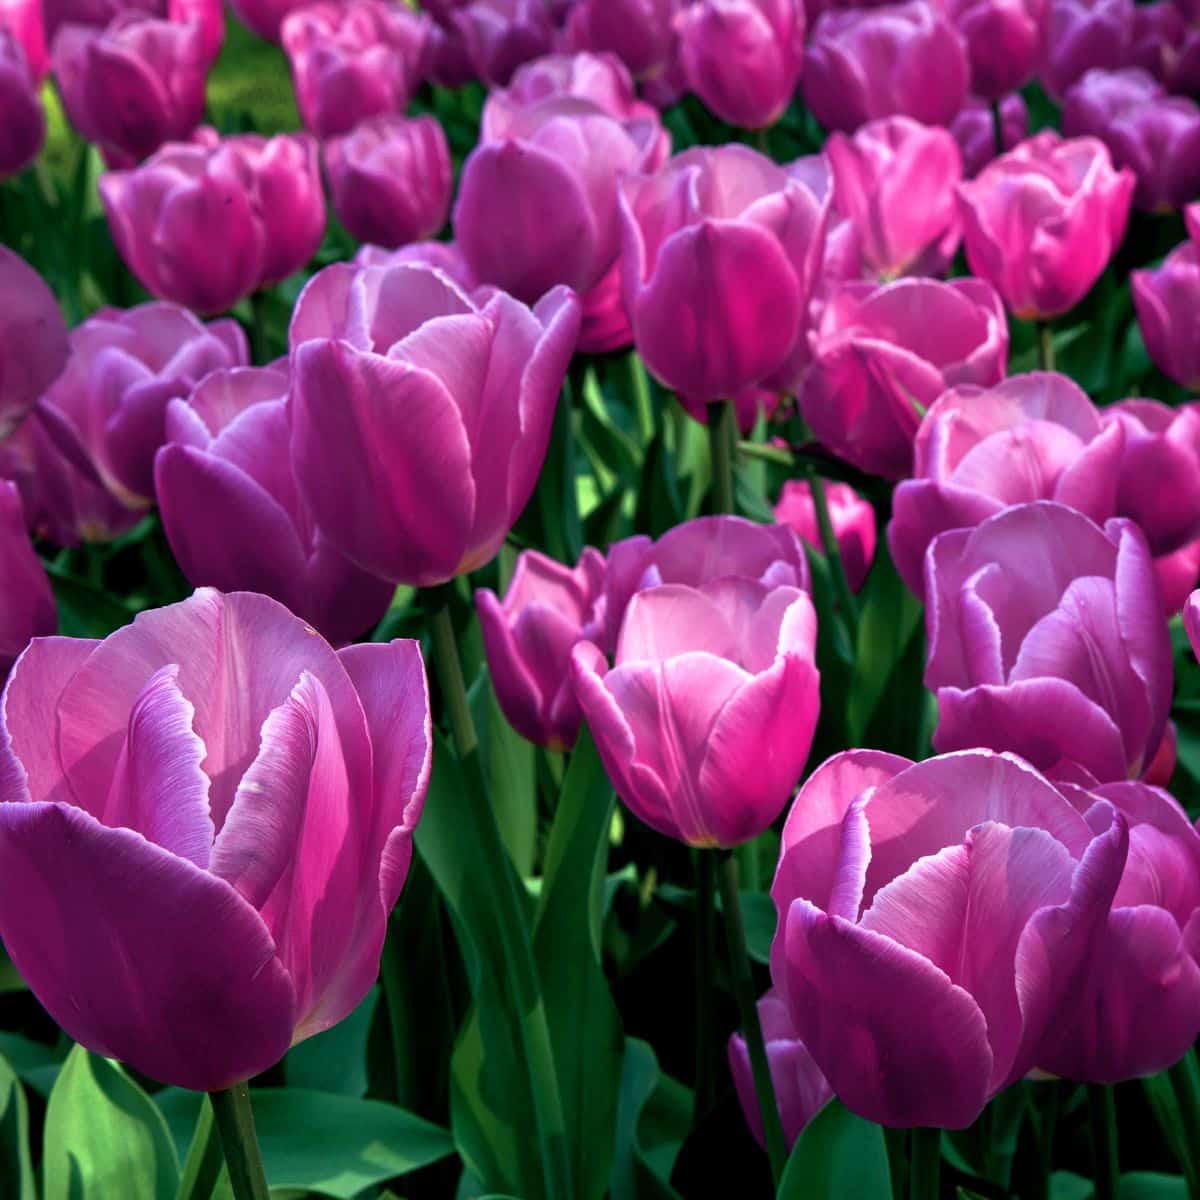 tulips symbolize